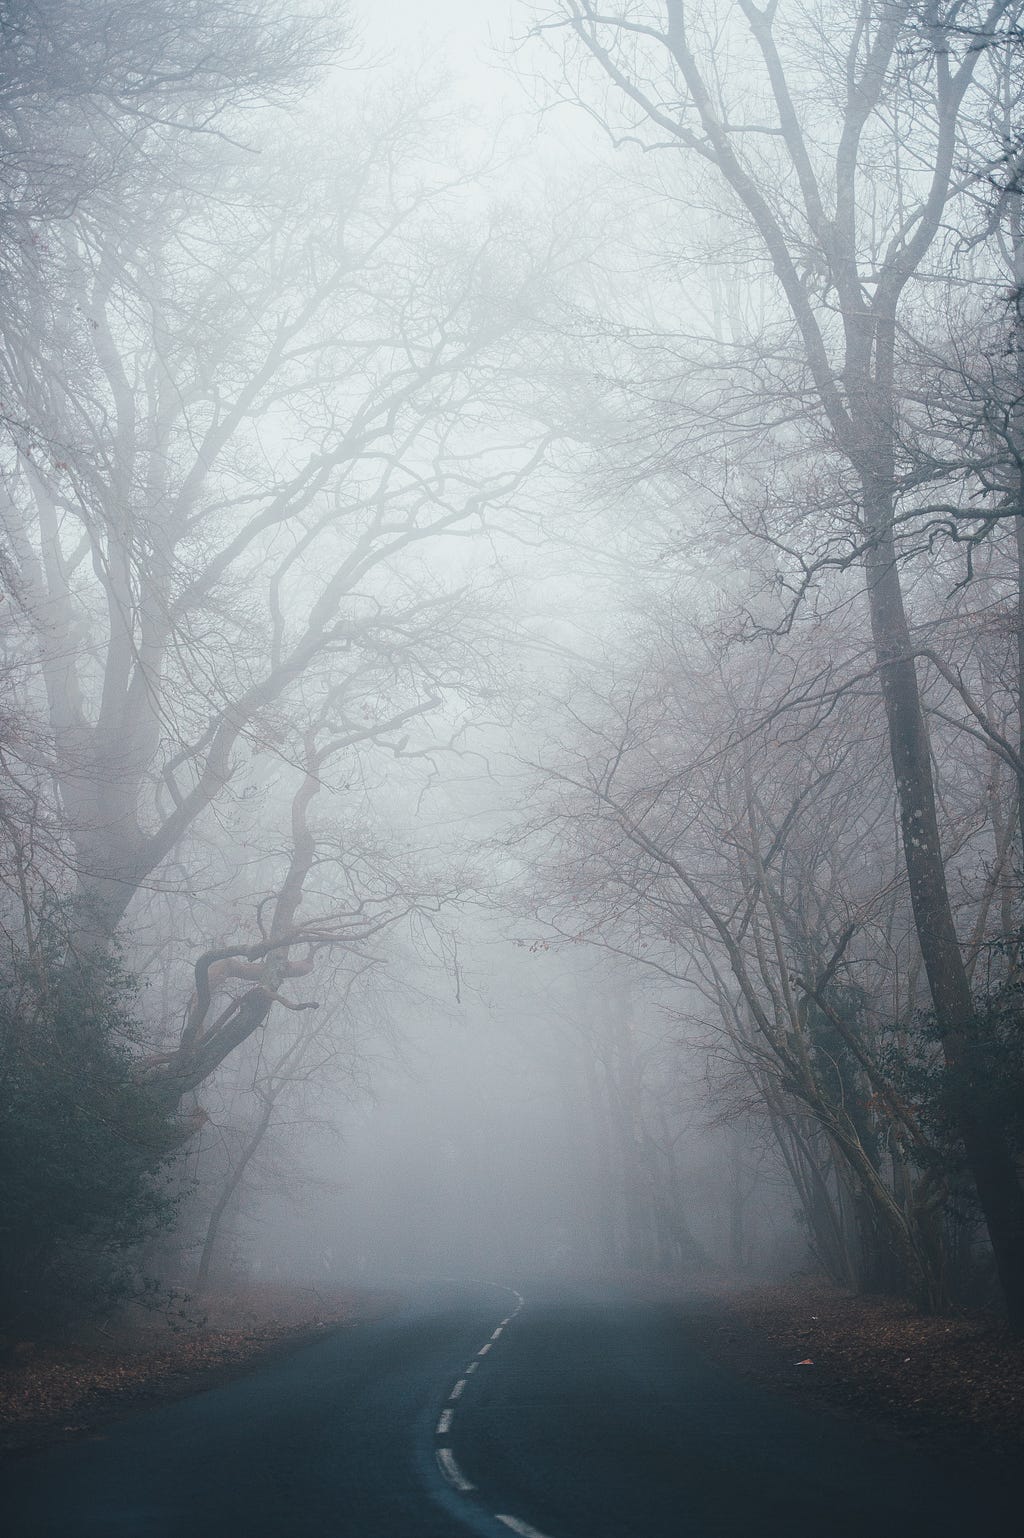 Road passing through trees shrouded in fog